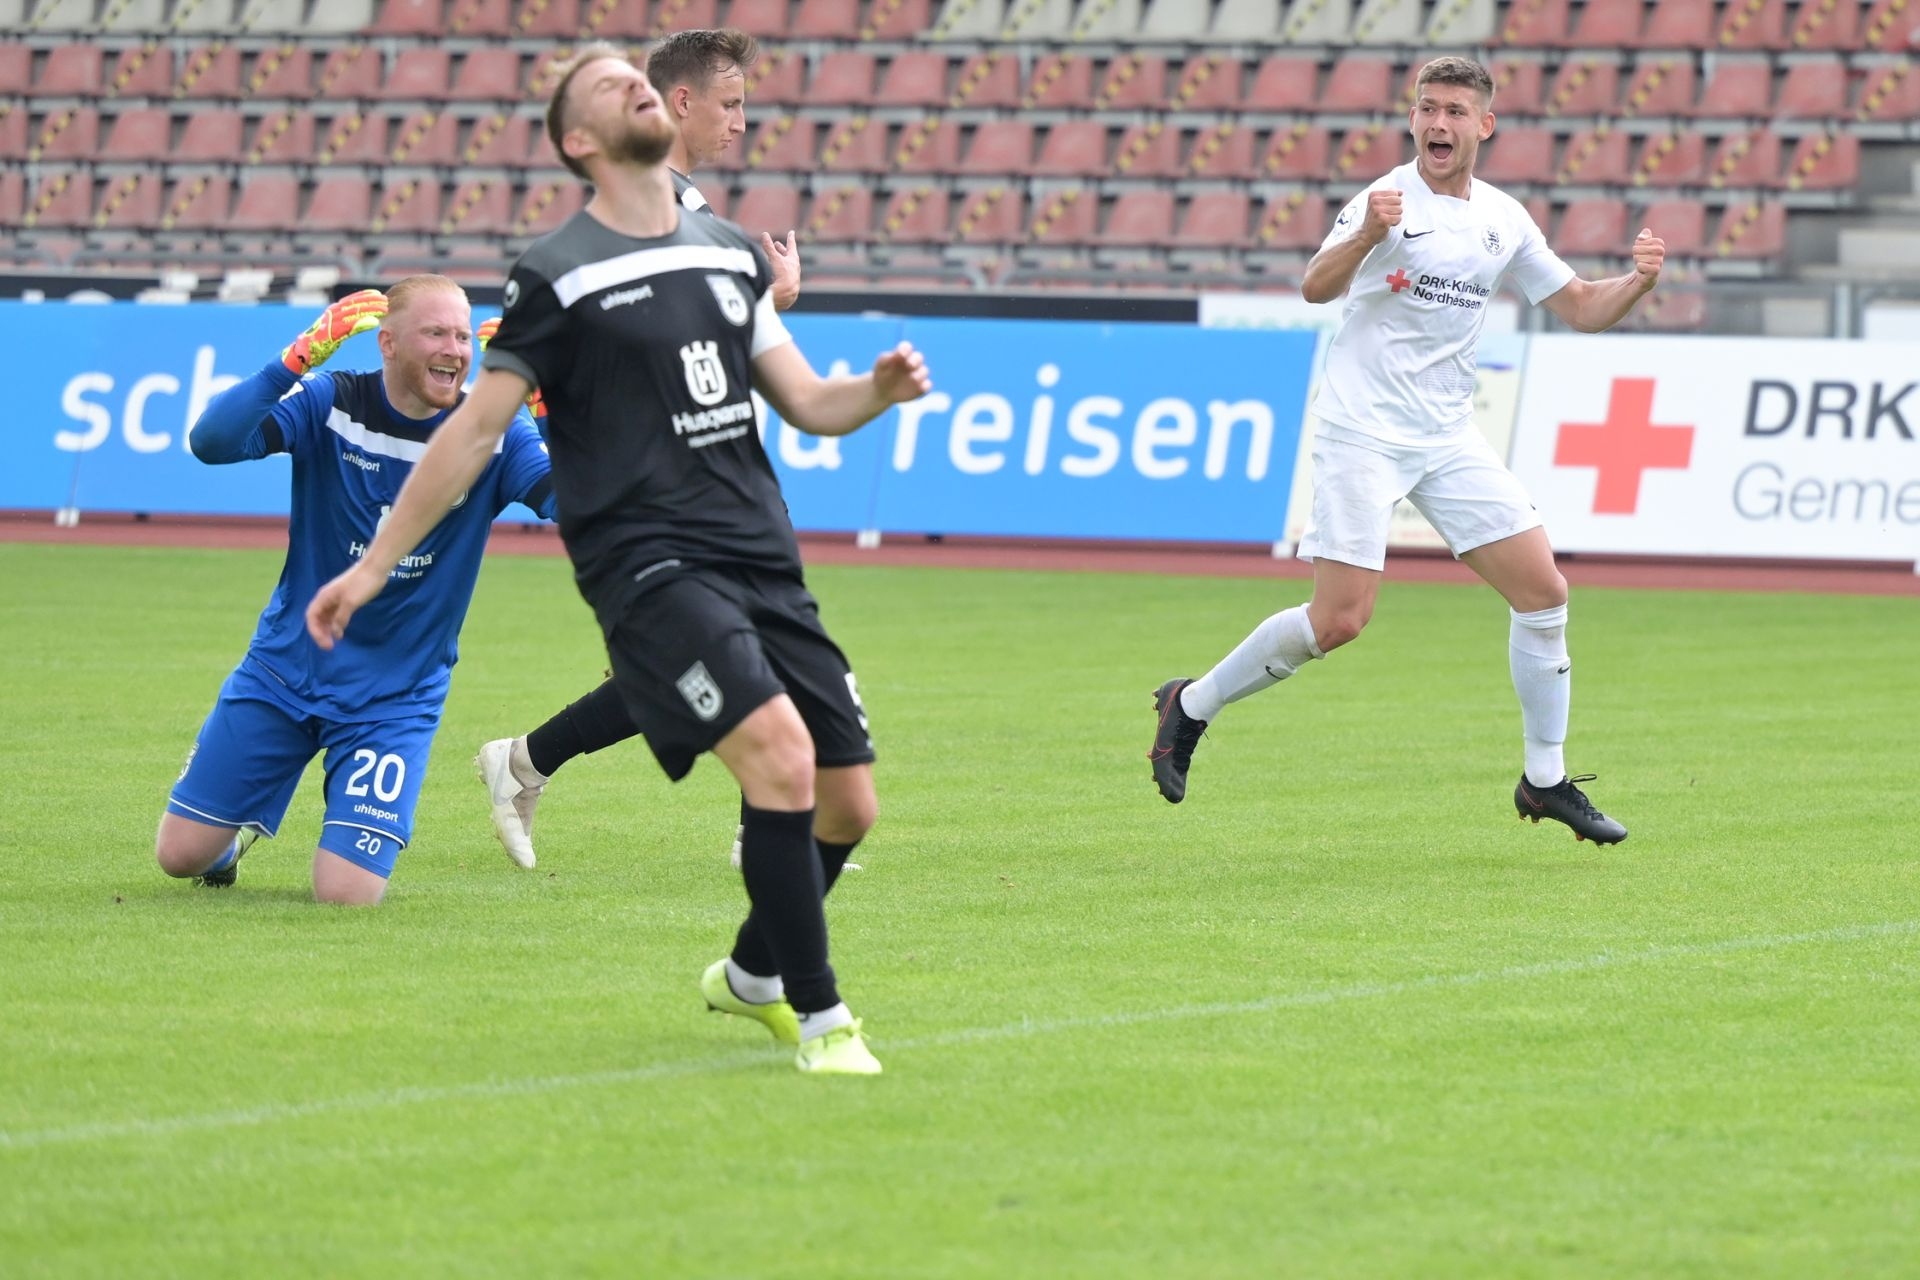 Regionalliga Südwest 2020/21, KSV Hessen Kassel, SSV Ulm 1846, Endstand 3:1, Jubel zum 2:0